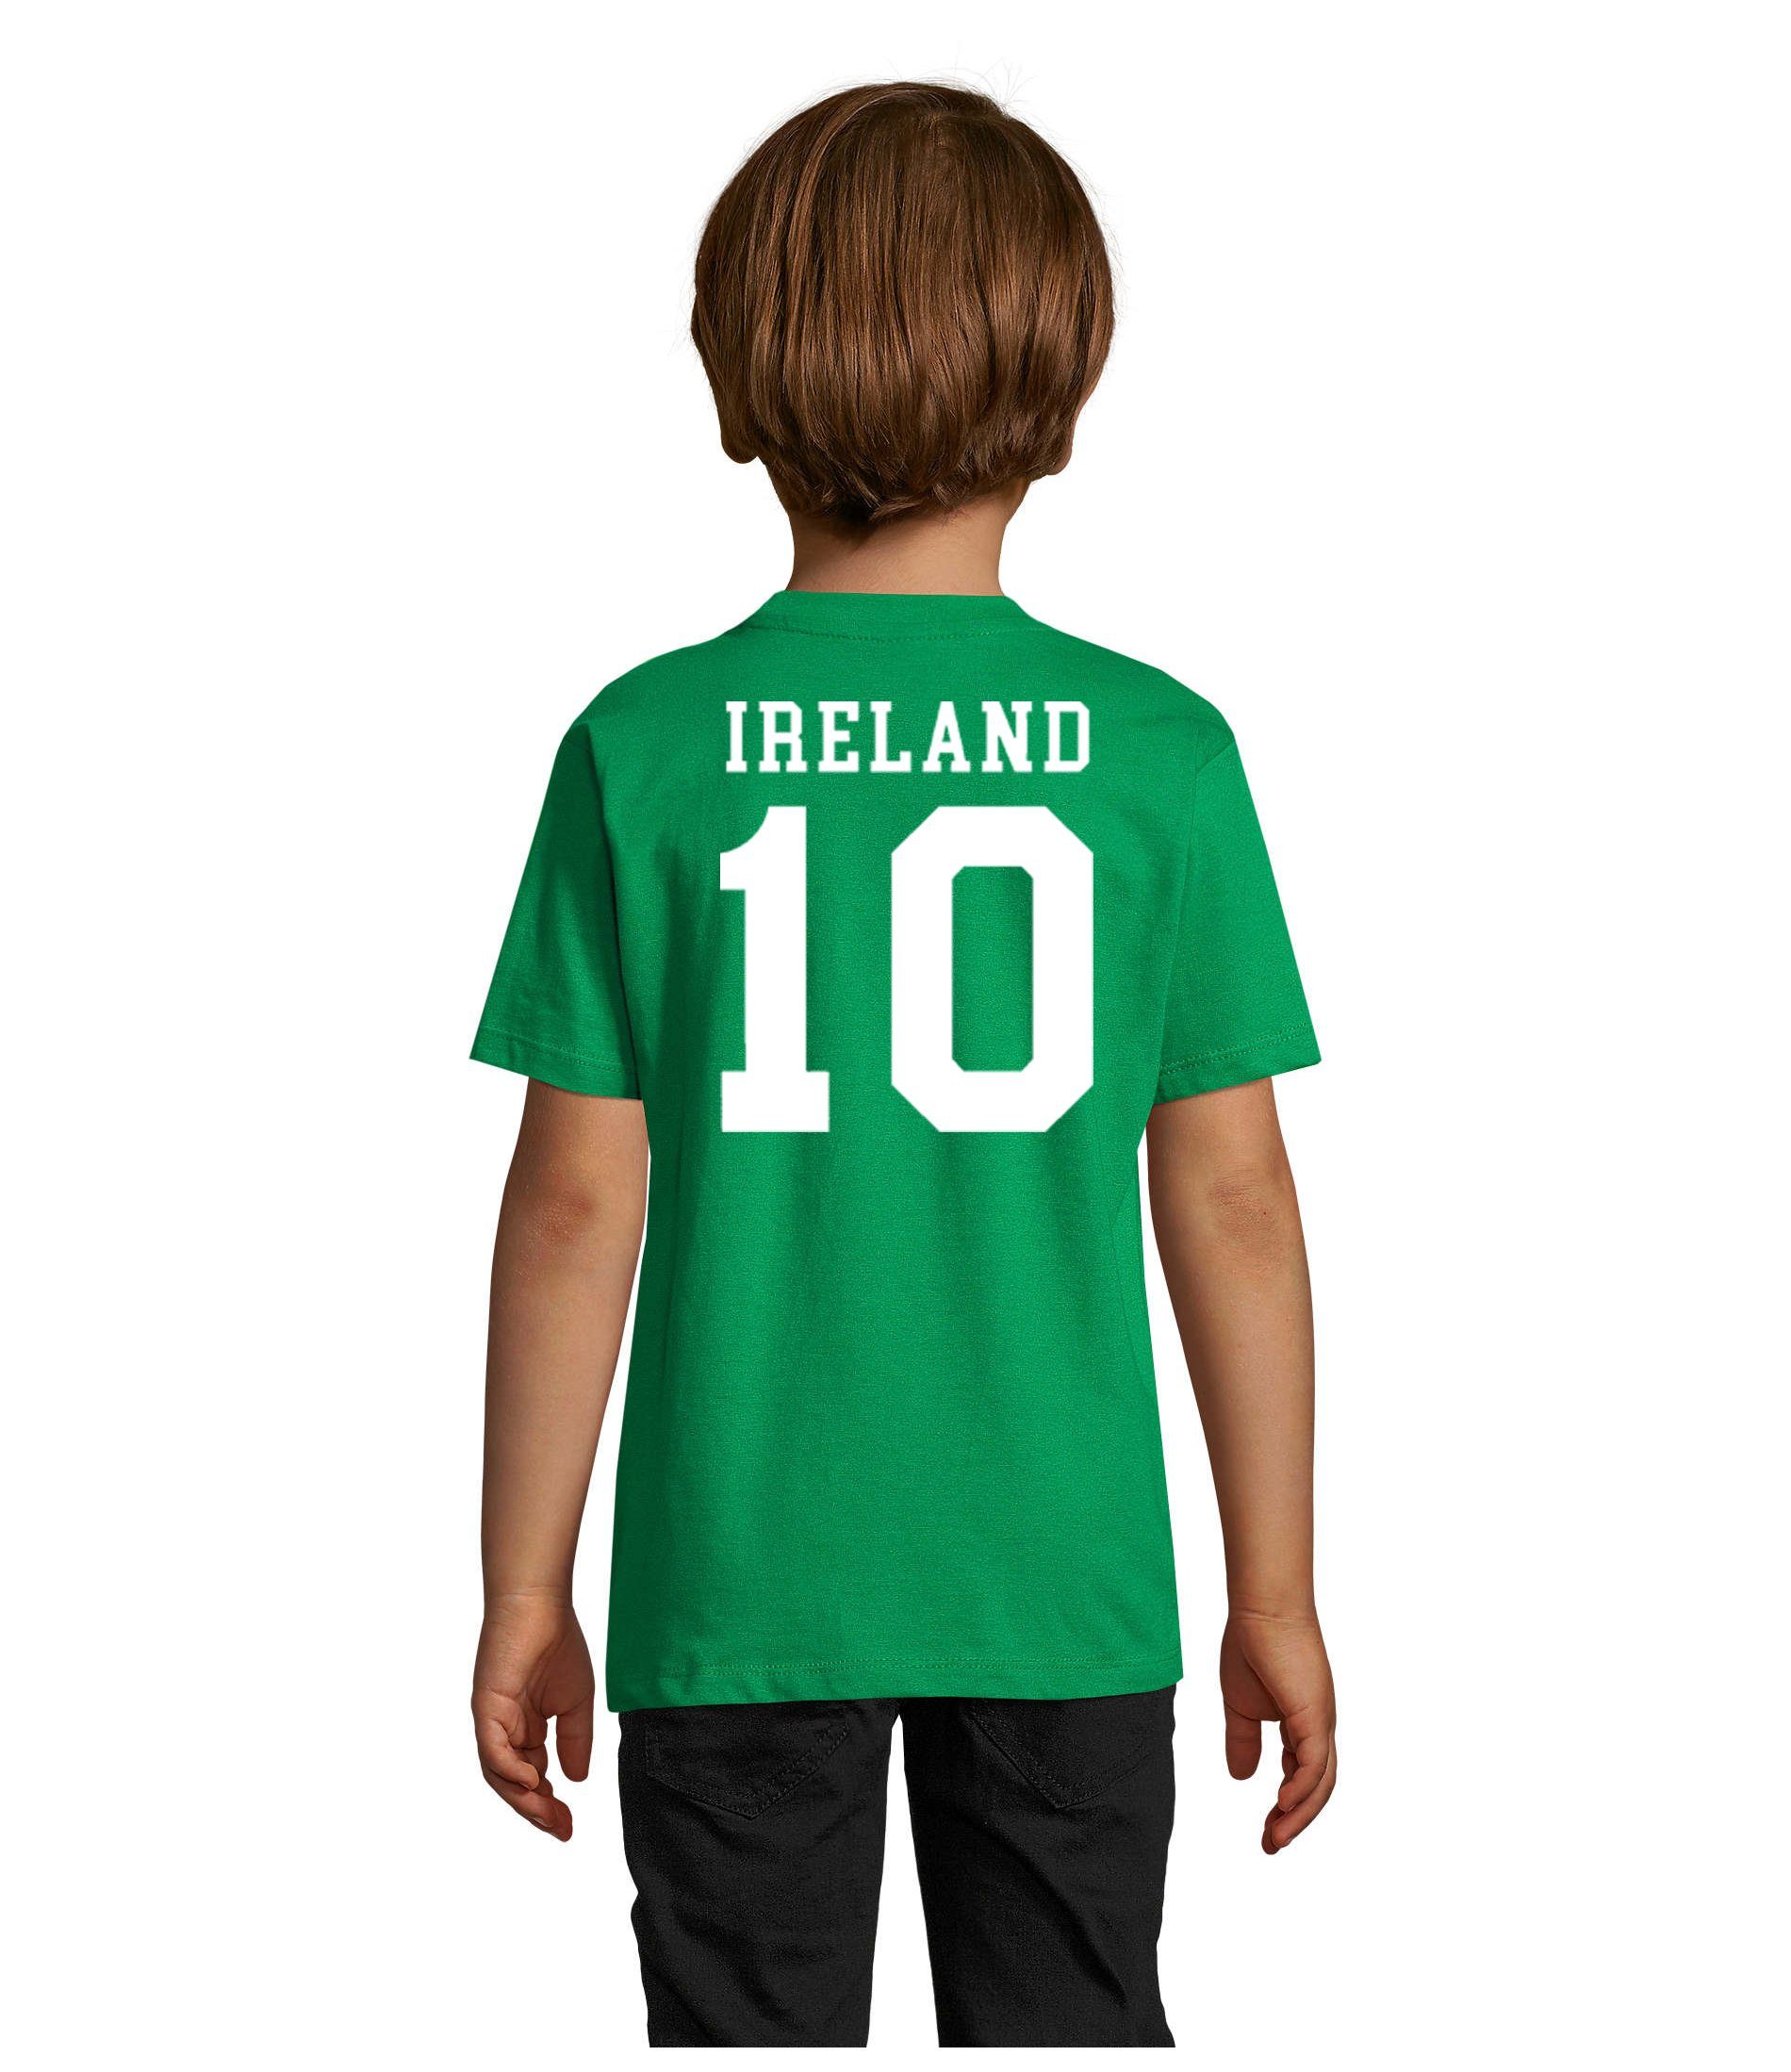 & Brownie Blondie Sport Trikot Kinder Weltmeister EM Irland Weiss/Grün Fußball Handball WM T-Shirt